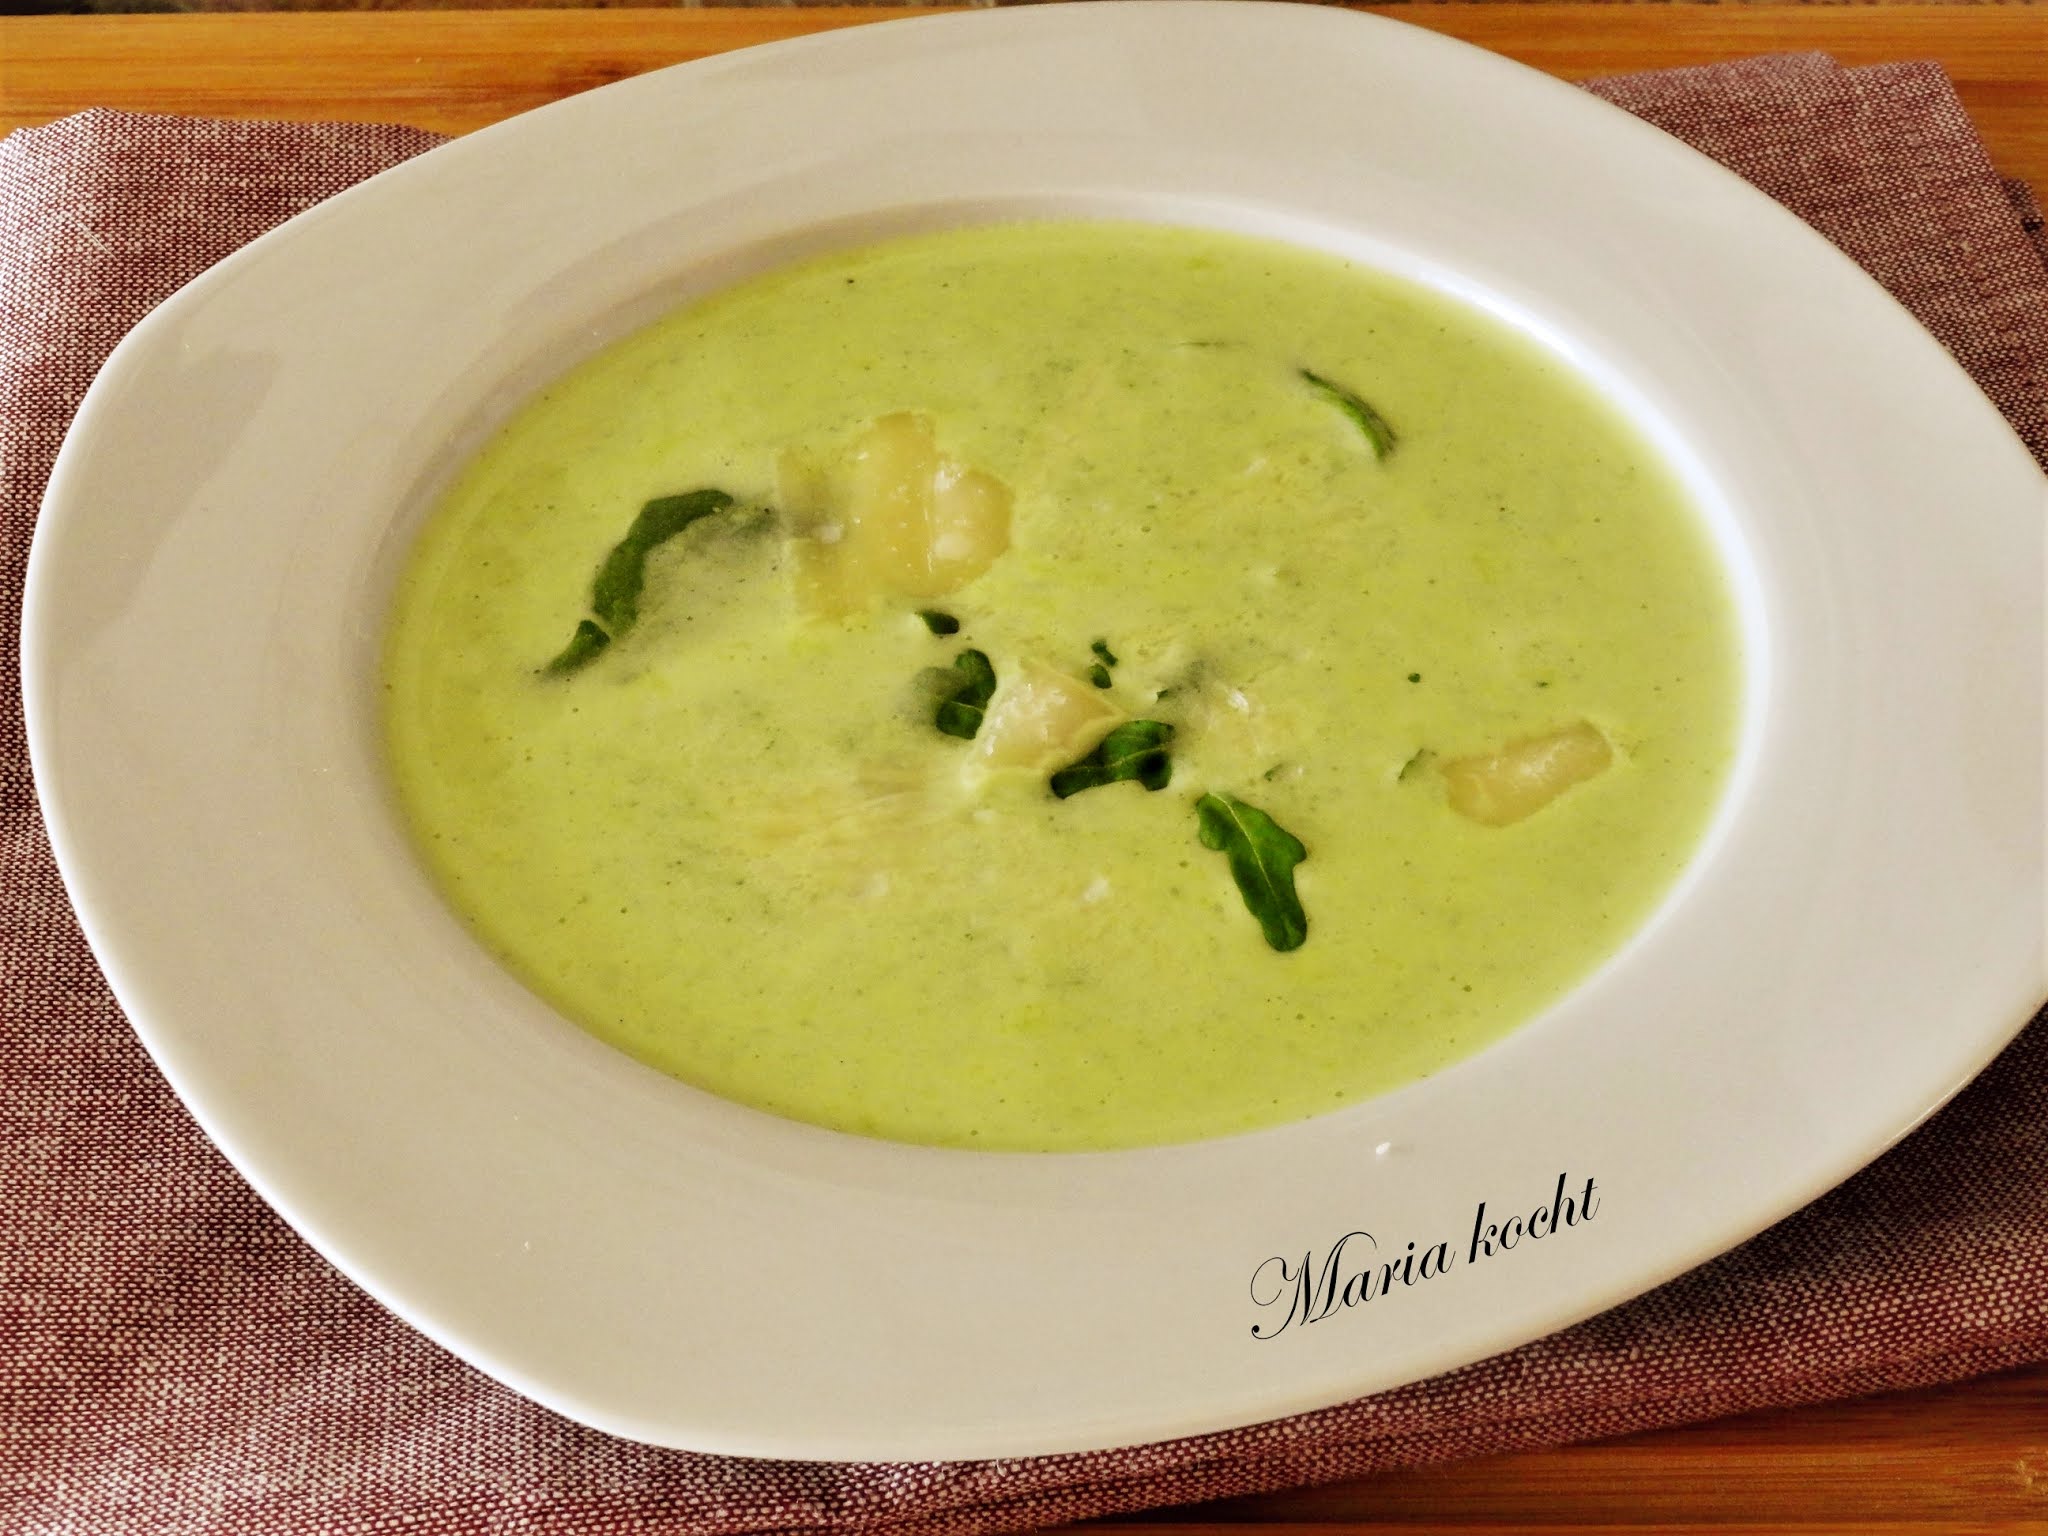 Maria kocht: Rucola-Suppe mit Parmesan / Rukkolaleves parmezánnal